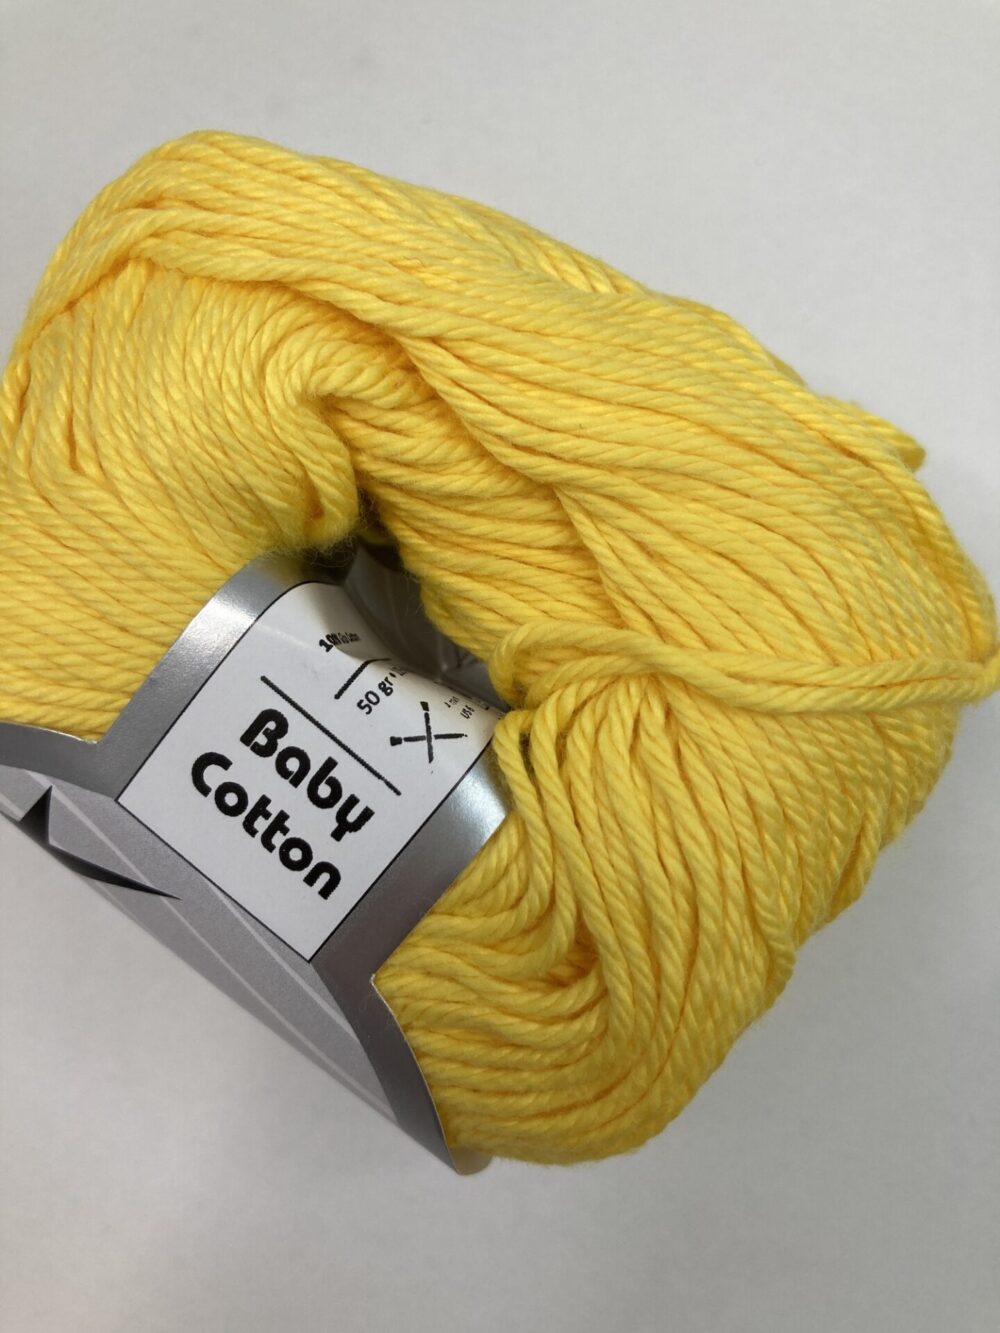 yellow ball yarn